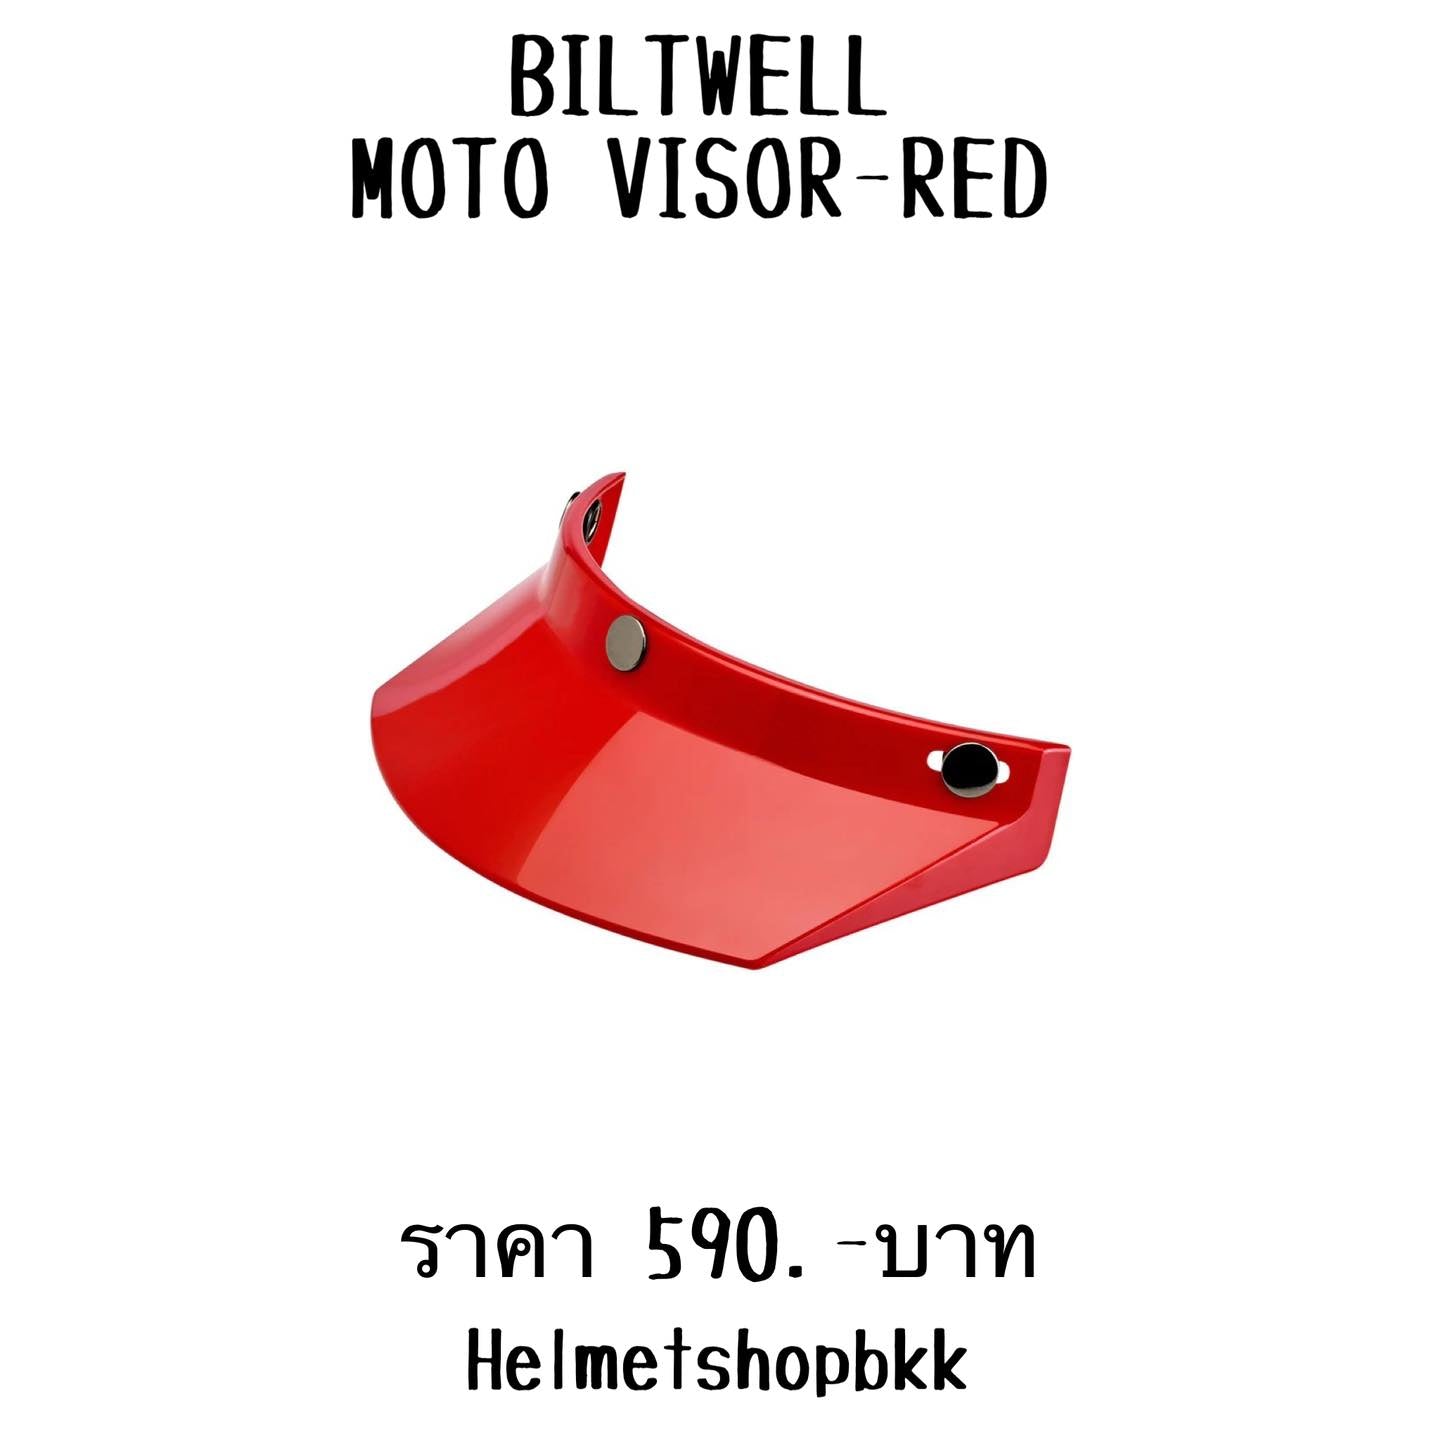 BILTWELL MOTO VISOR RED